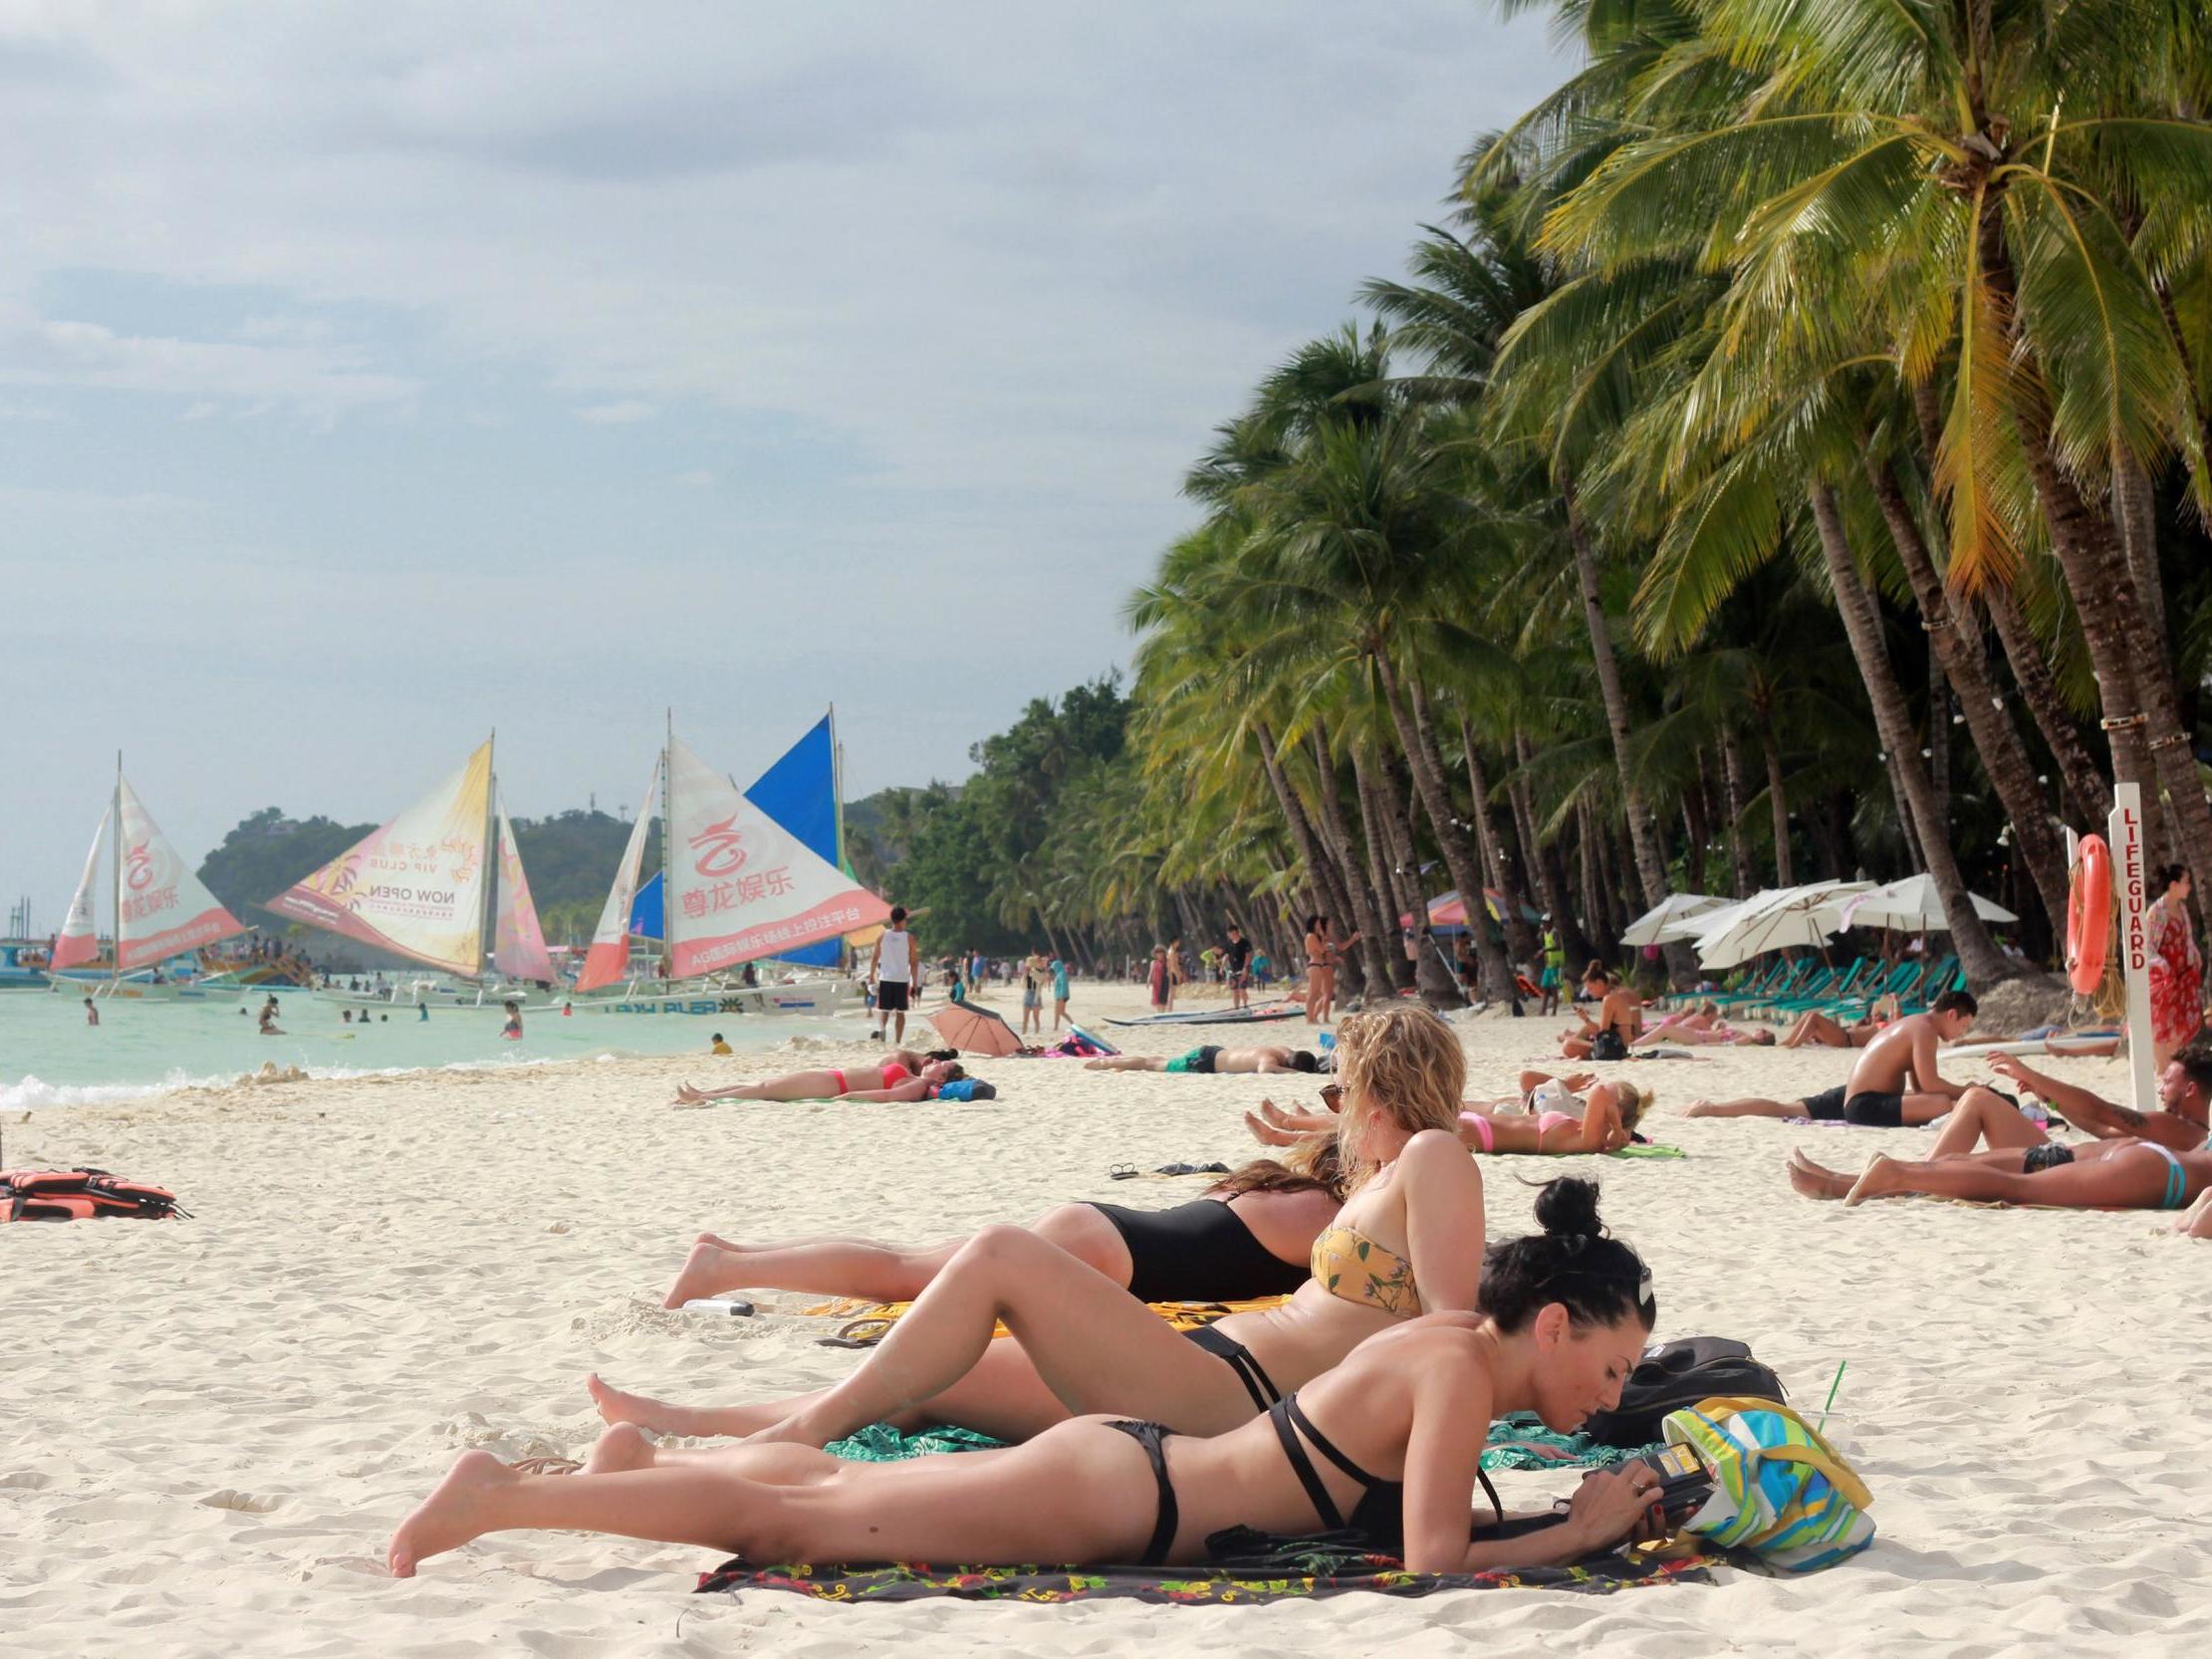 People Beach Sex - Tourist fined for wearing tiny bikini on beach in ...